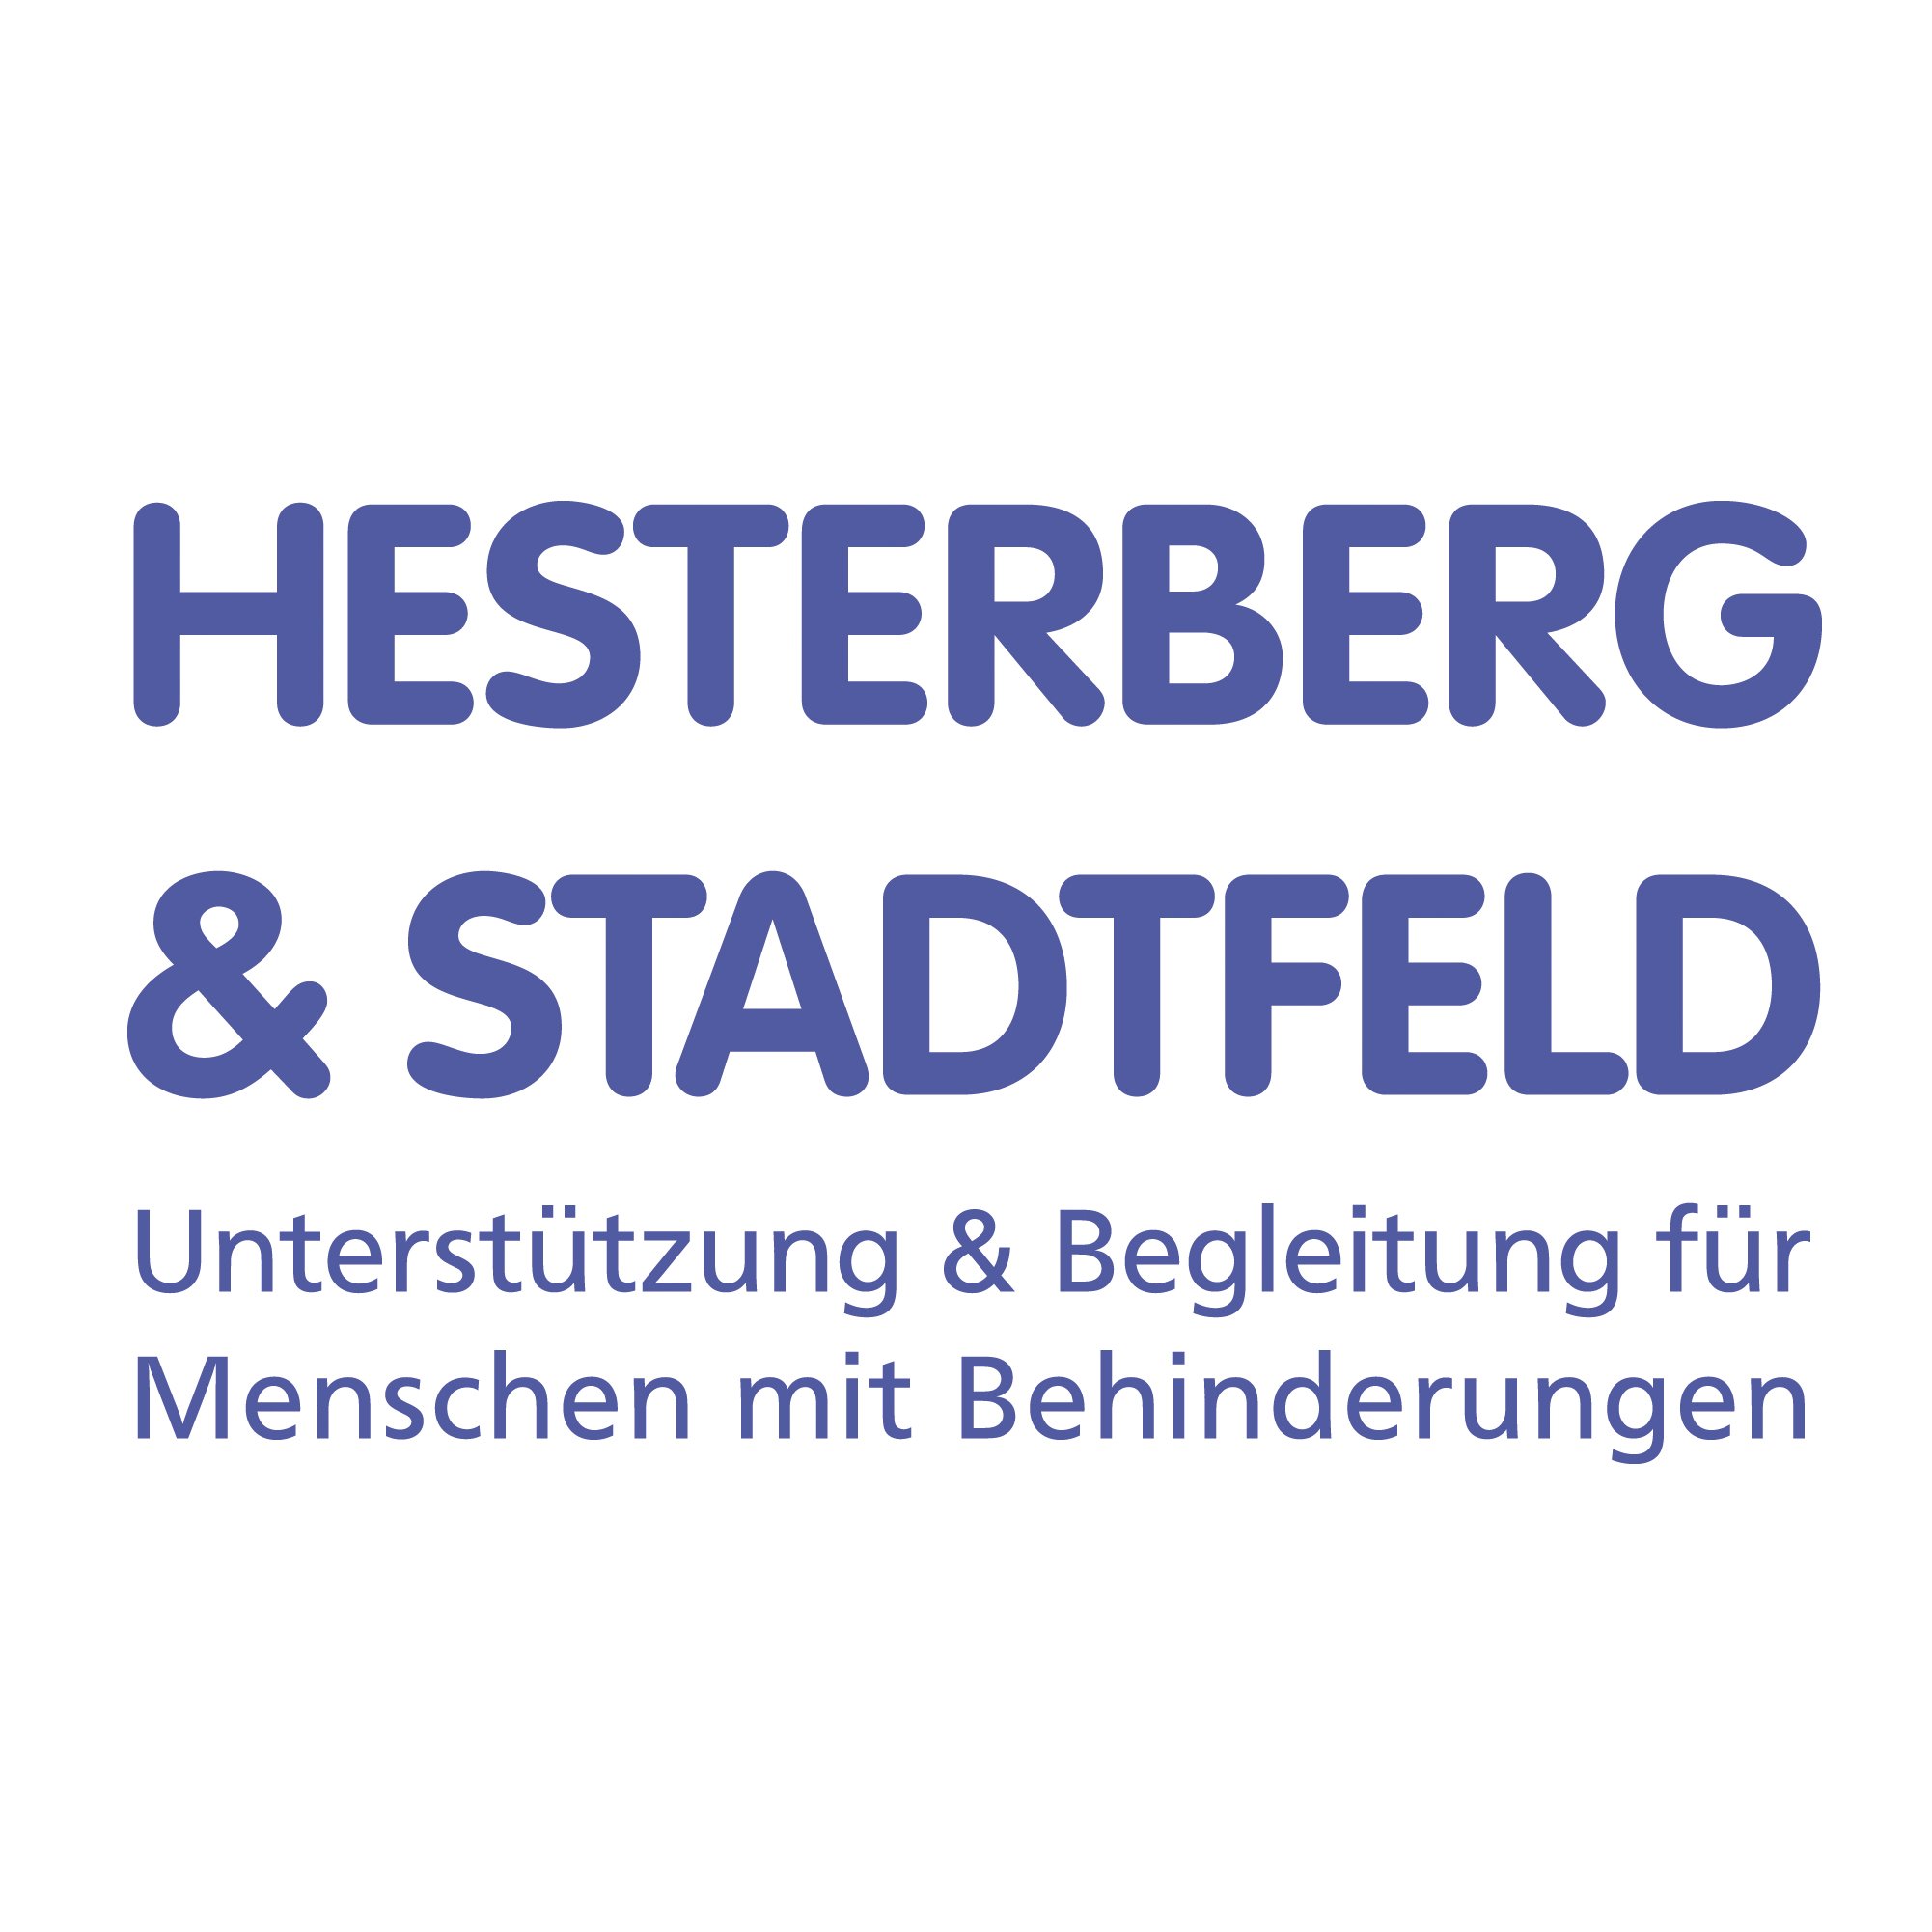 Logo von Neufelder Weg 6b, Schleswig, Hesterberg & Stadtfeld gGmbH